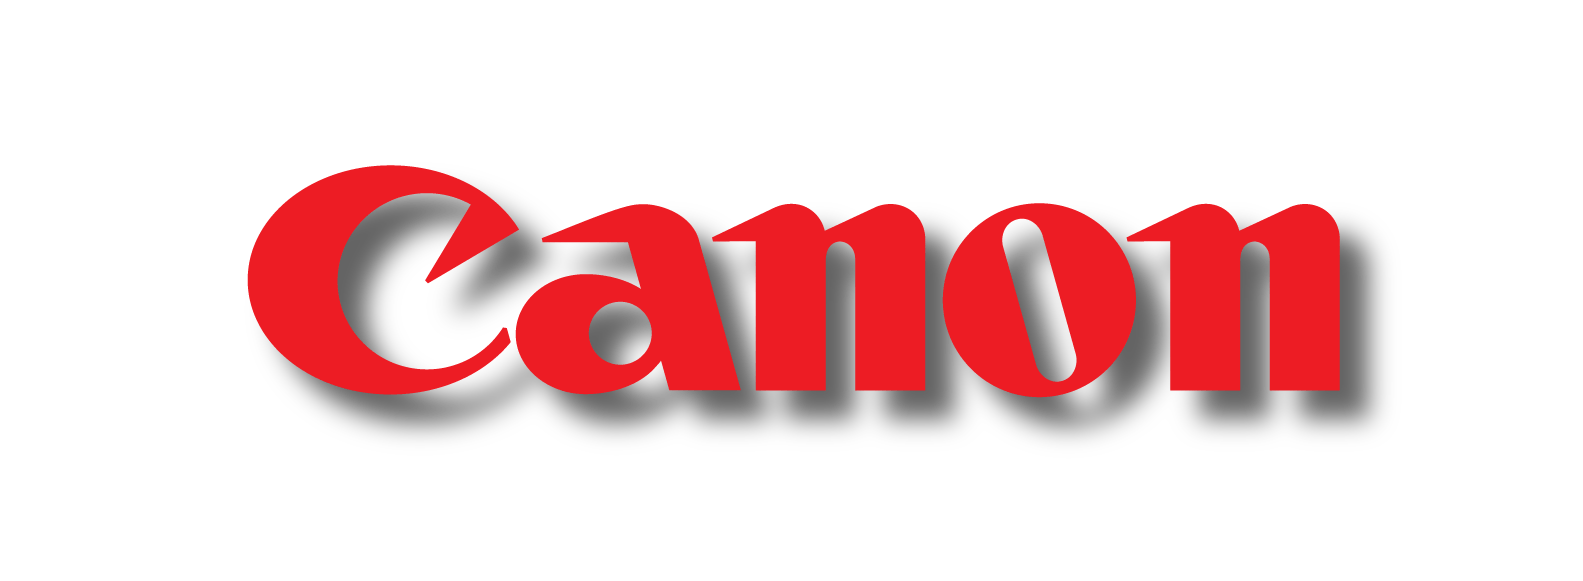 Canon EOS Logo - Canon Logo Eps PNG Transparent Canon Logo Eps.PNG Images. | PlusPNG